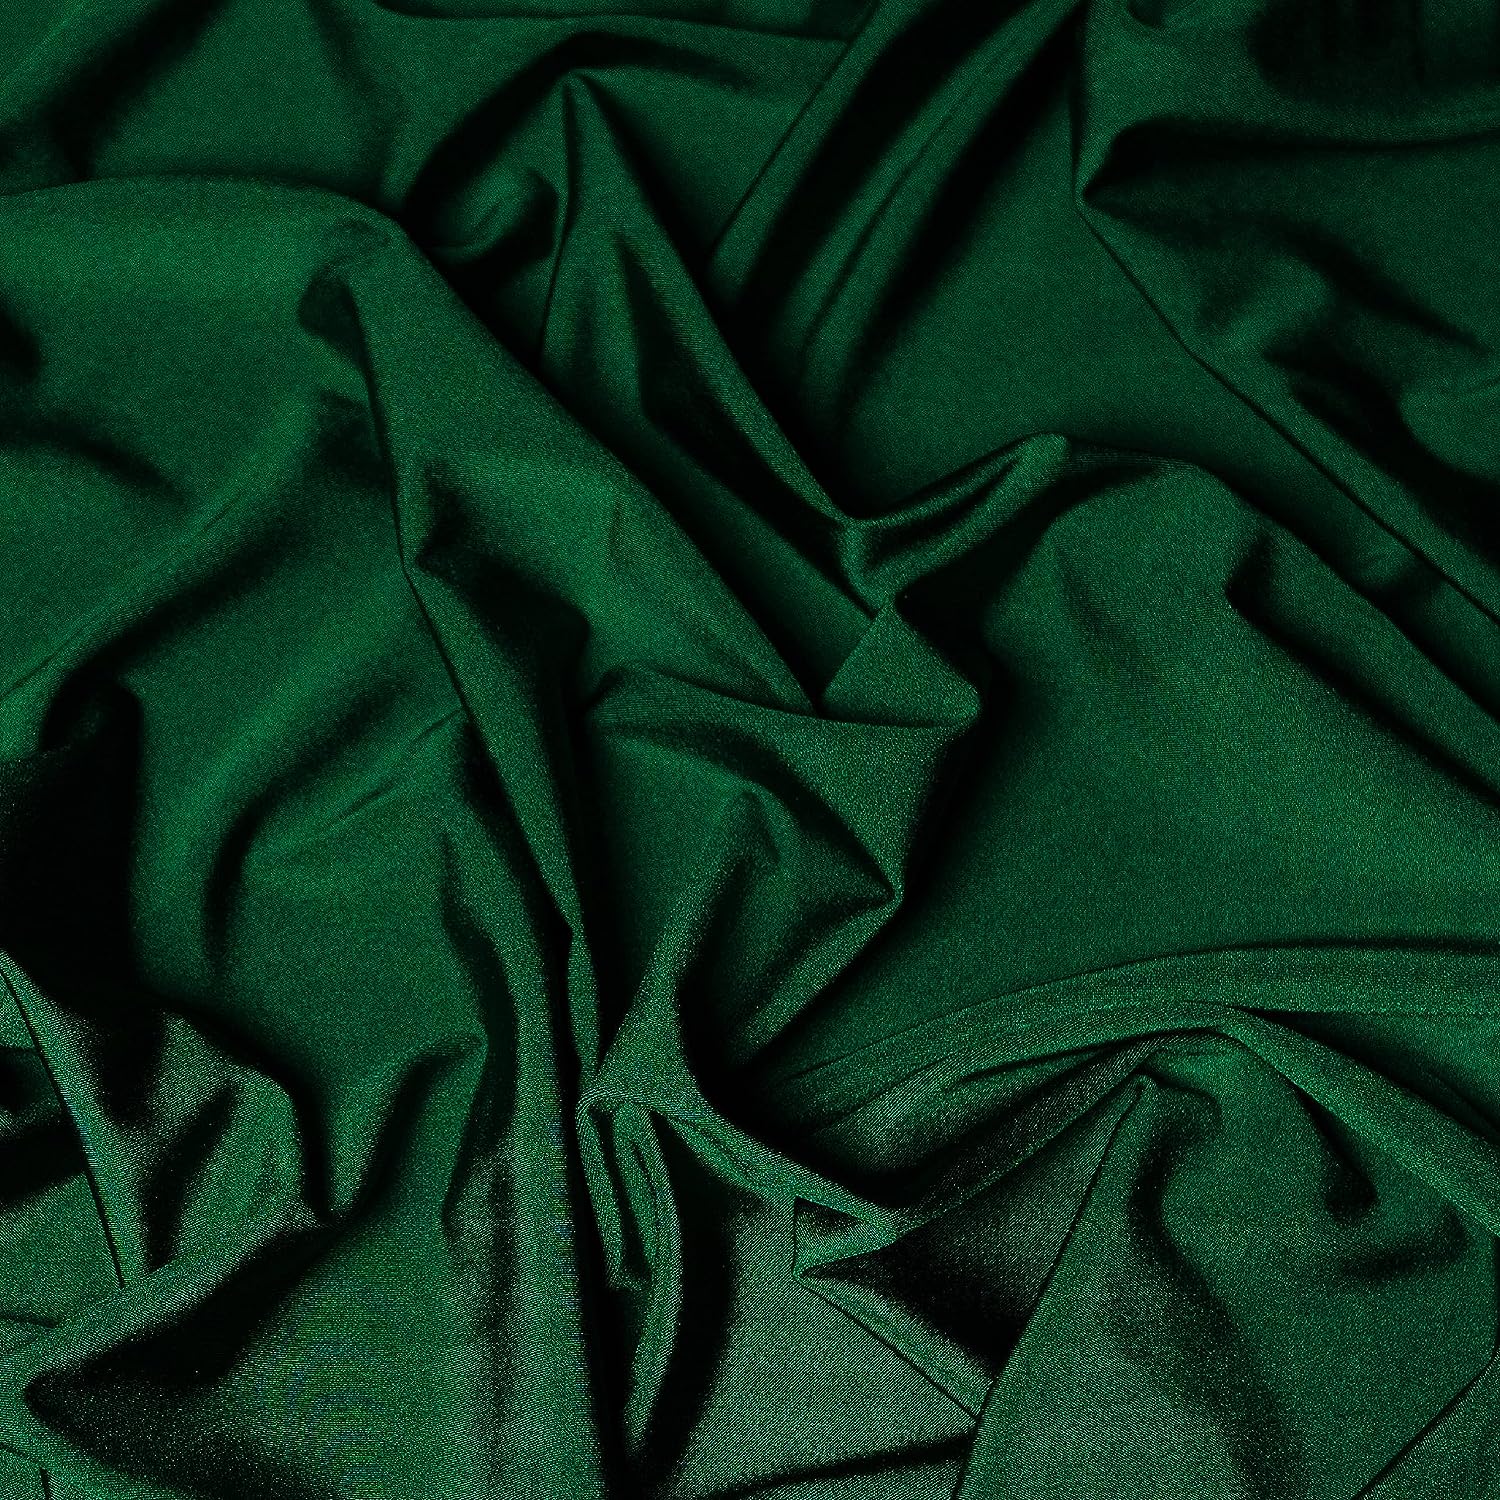 Hunter Green Luxury Nylon Spandex Fabric By The YardICE FABRICSICE FABRICSBy The Yard (60" Width)Hunter Green Luxury Nylon Spandex Fabric By The Yard ICE FABRICS